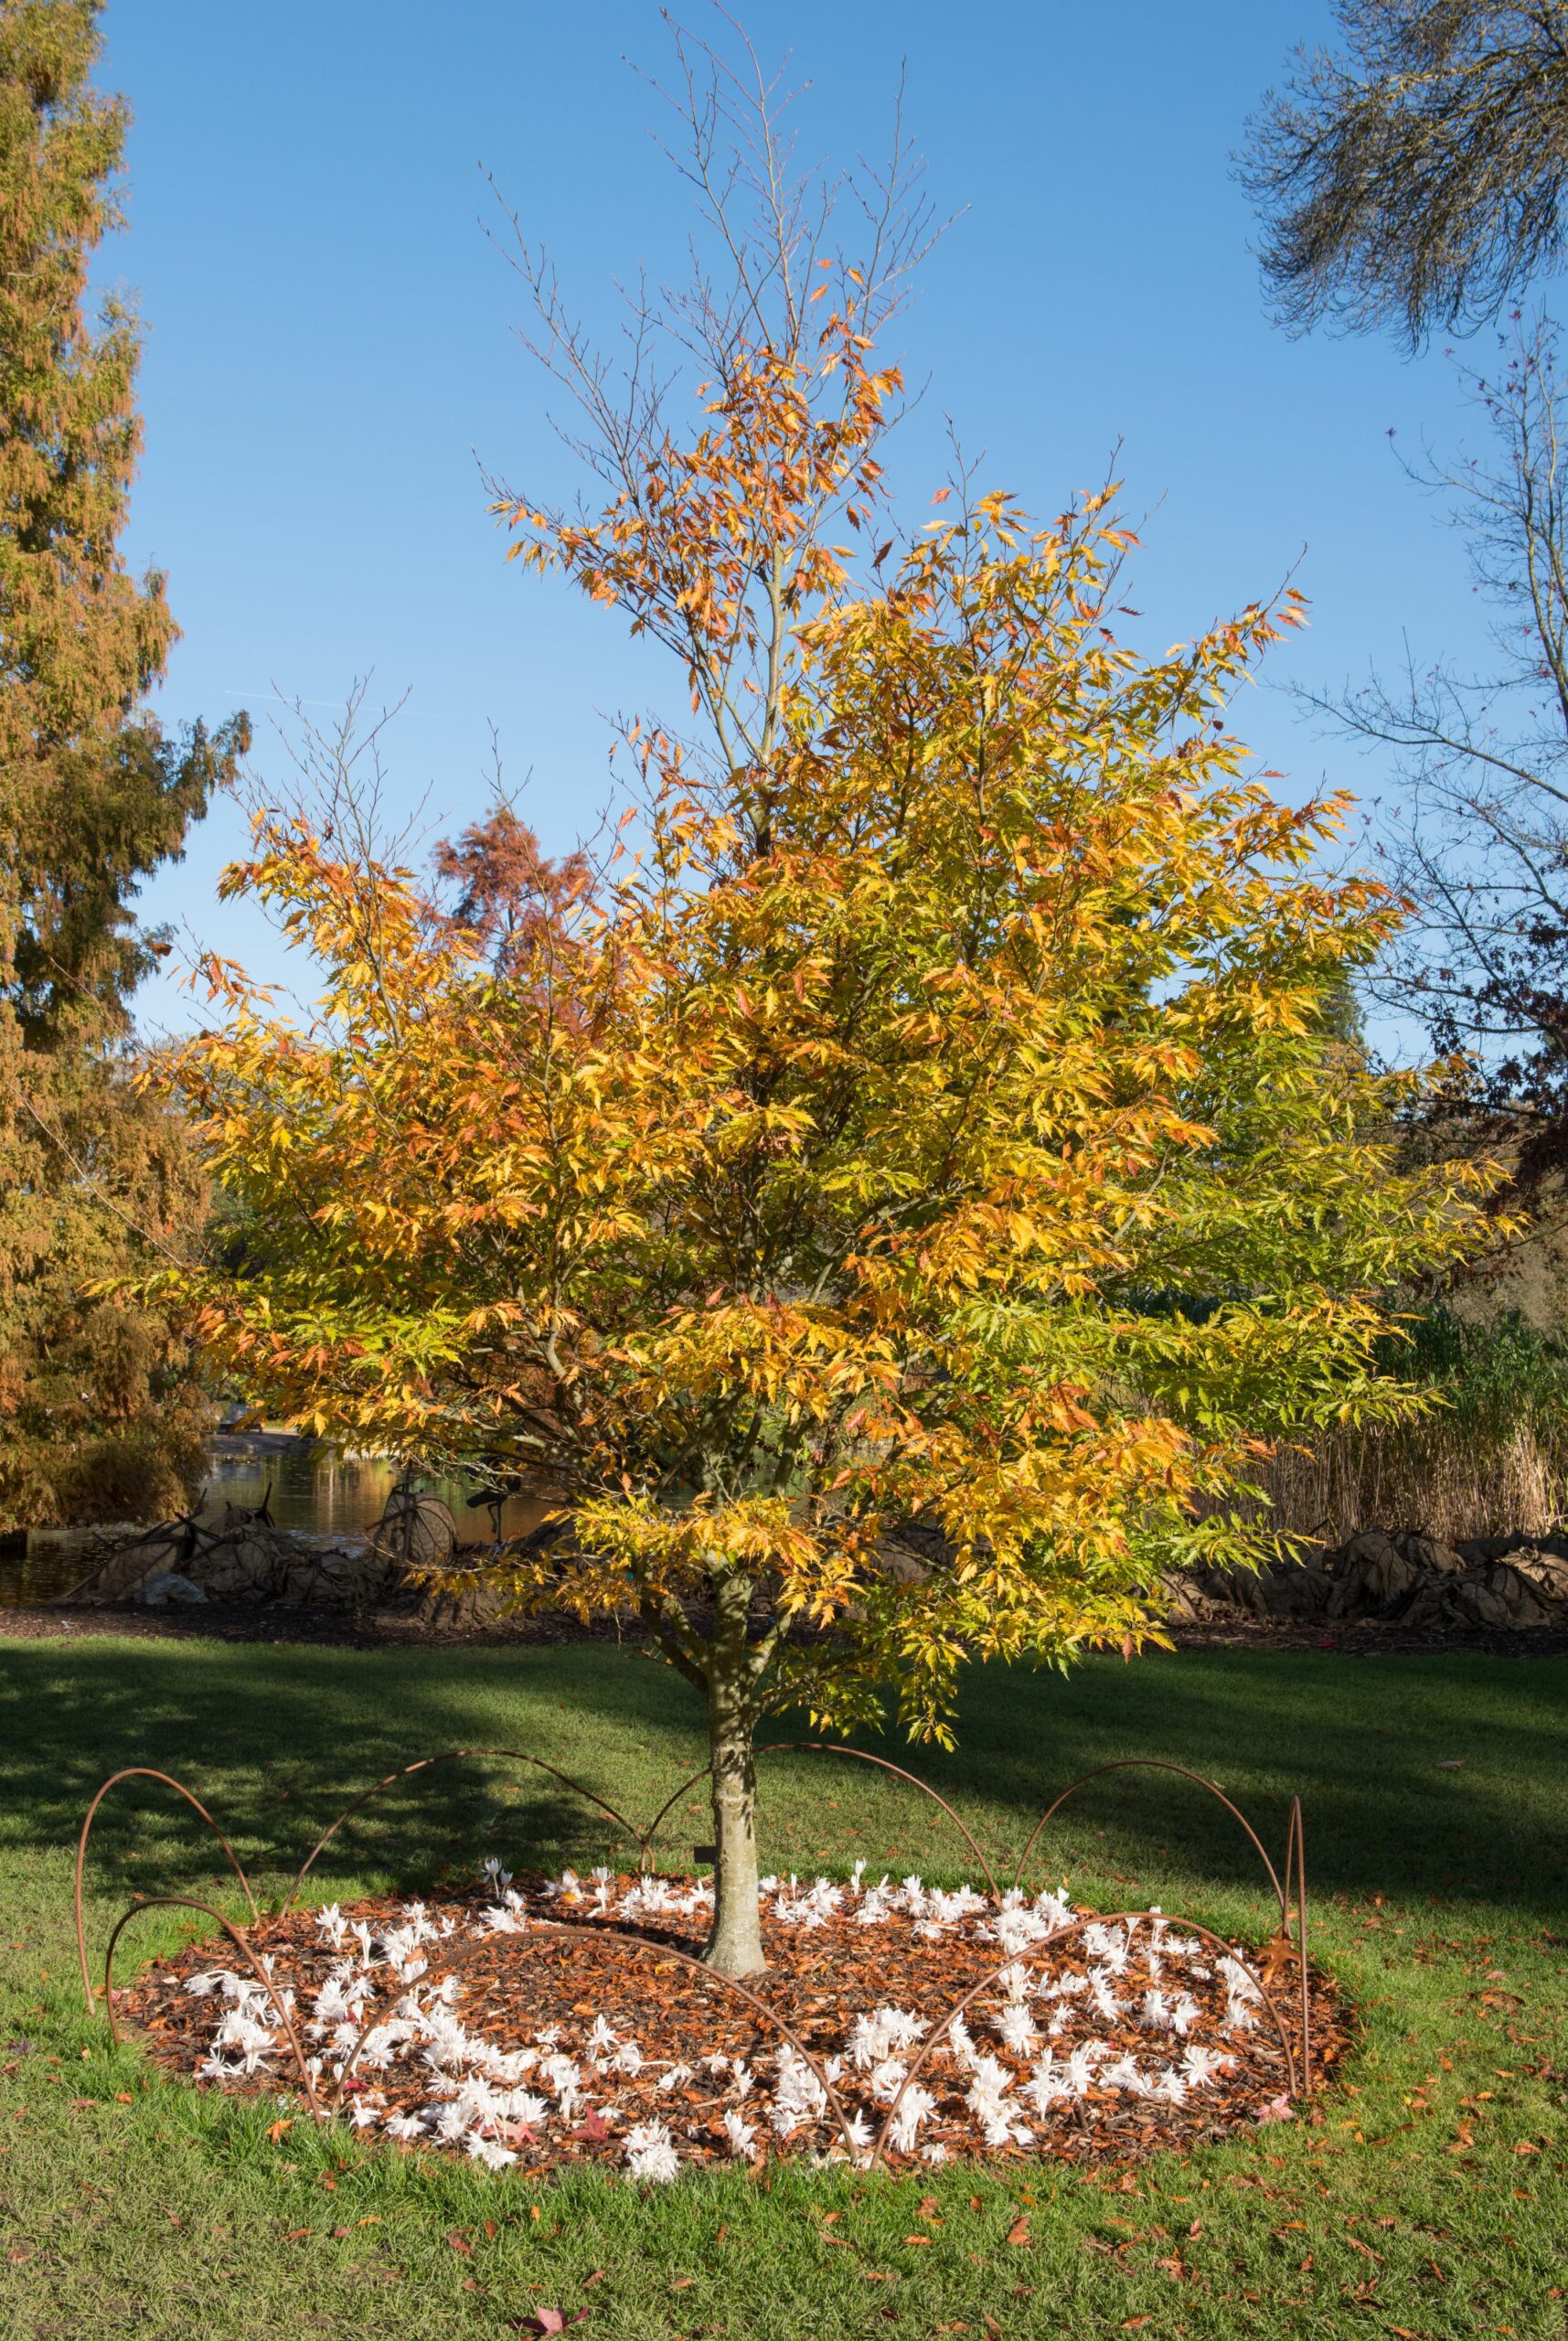 Fagus sylvatica Heterophylla Asplenifolia mature tree in field in autumn colour